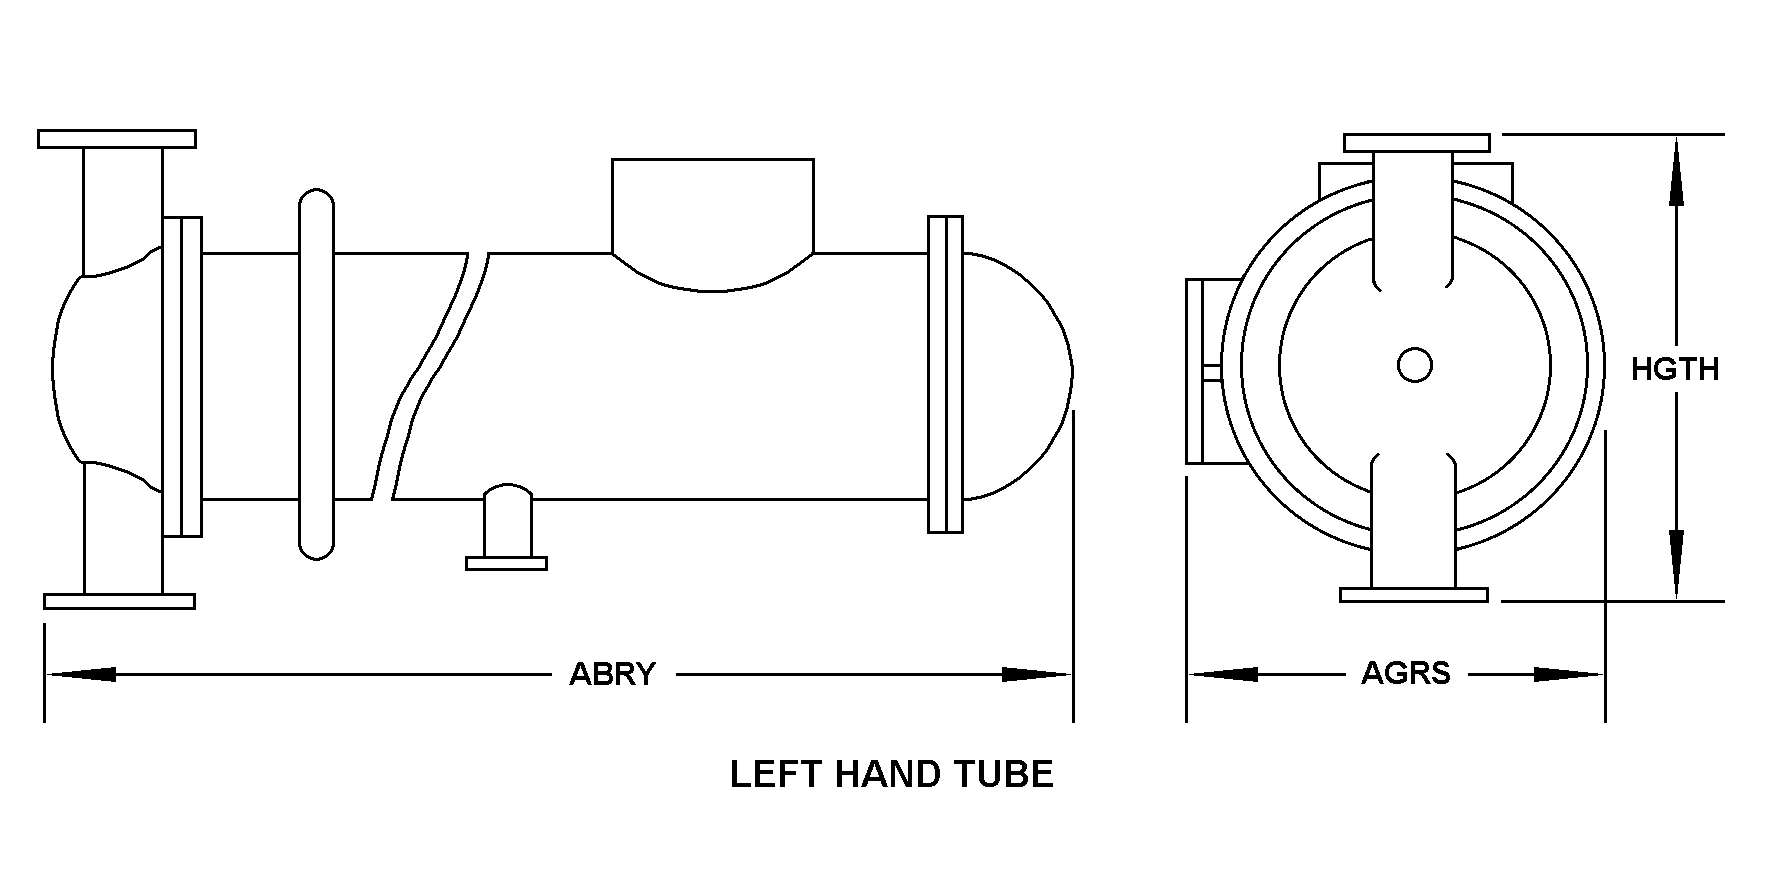 LEFT HAND TUBE style nsn 4420-01-463-2400